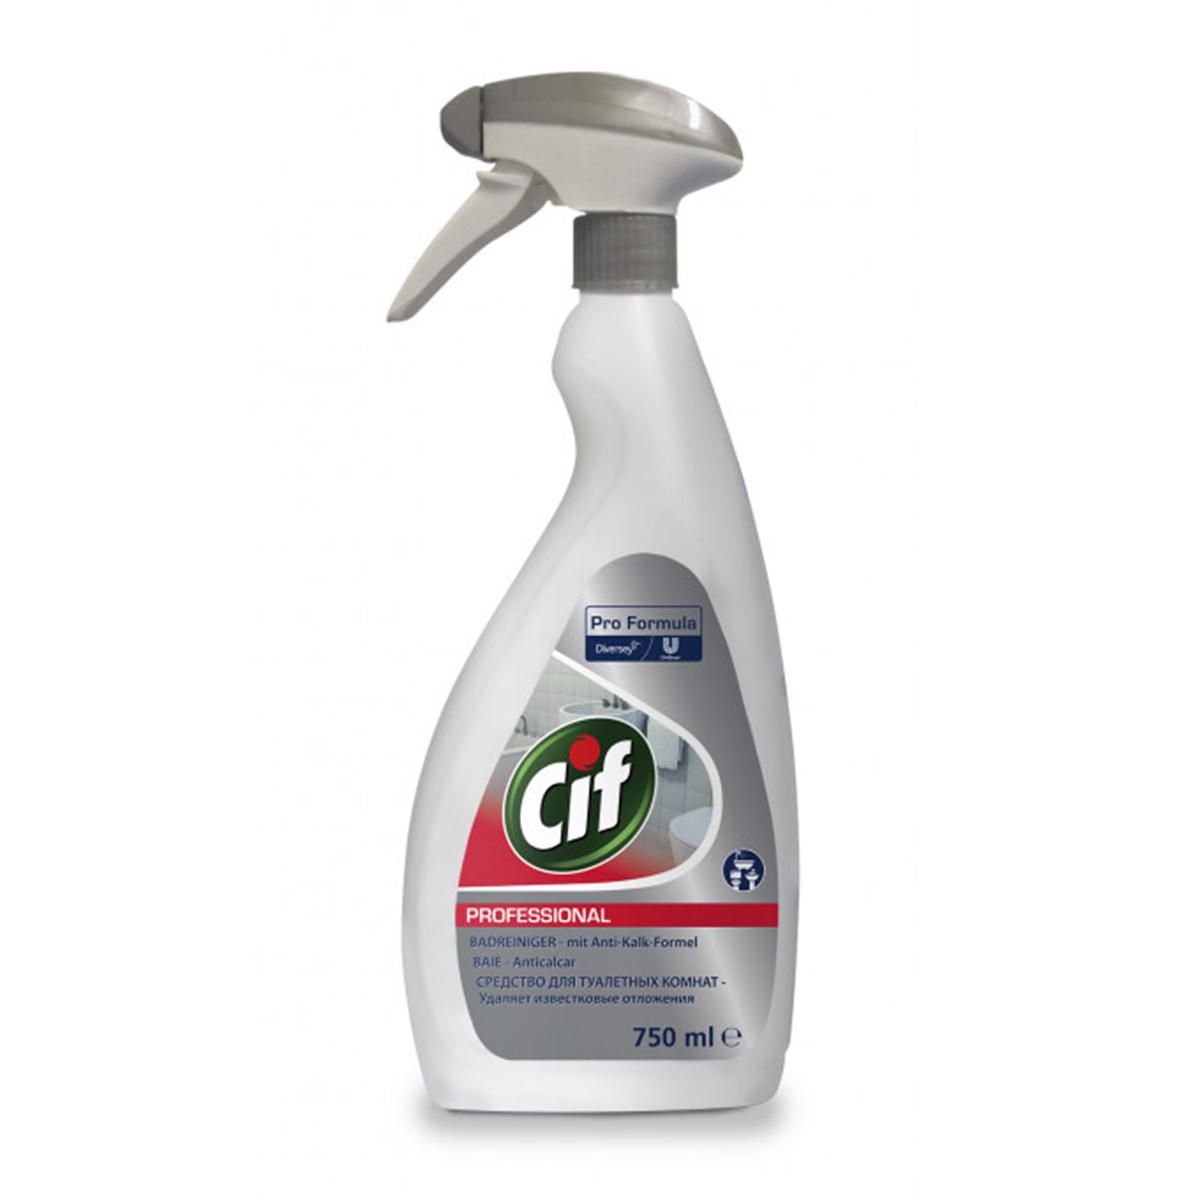 Detergent pentru baie Pro formula Cif 2in1, 750ml